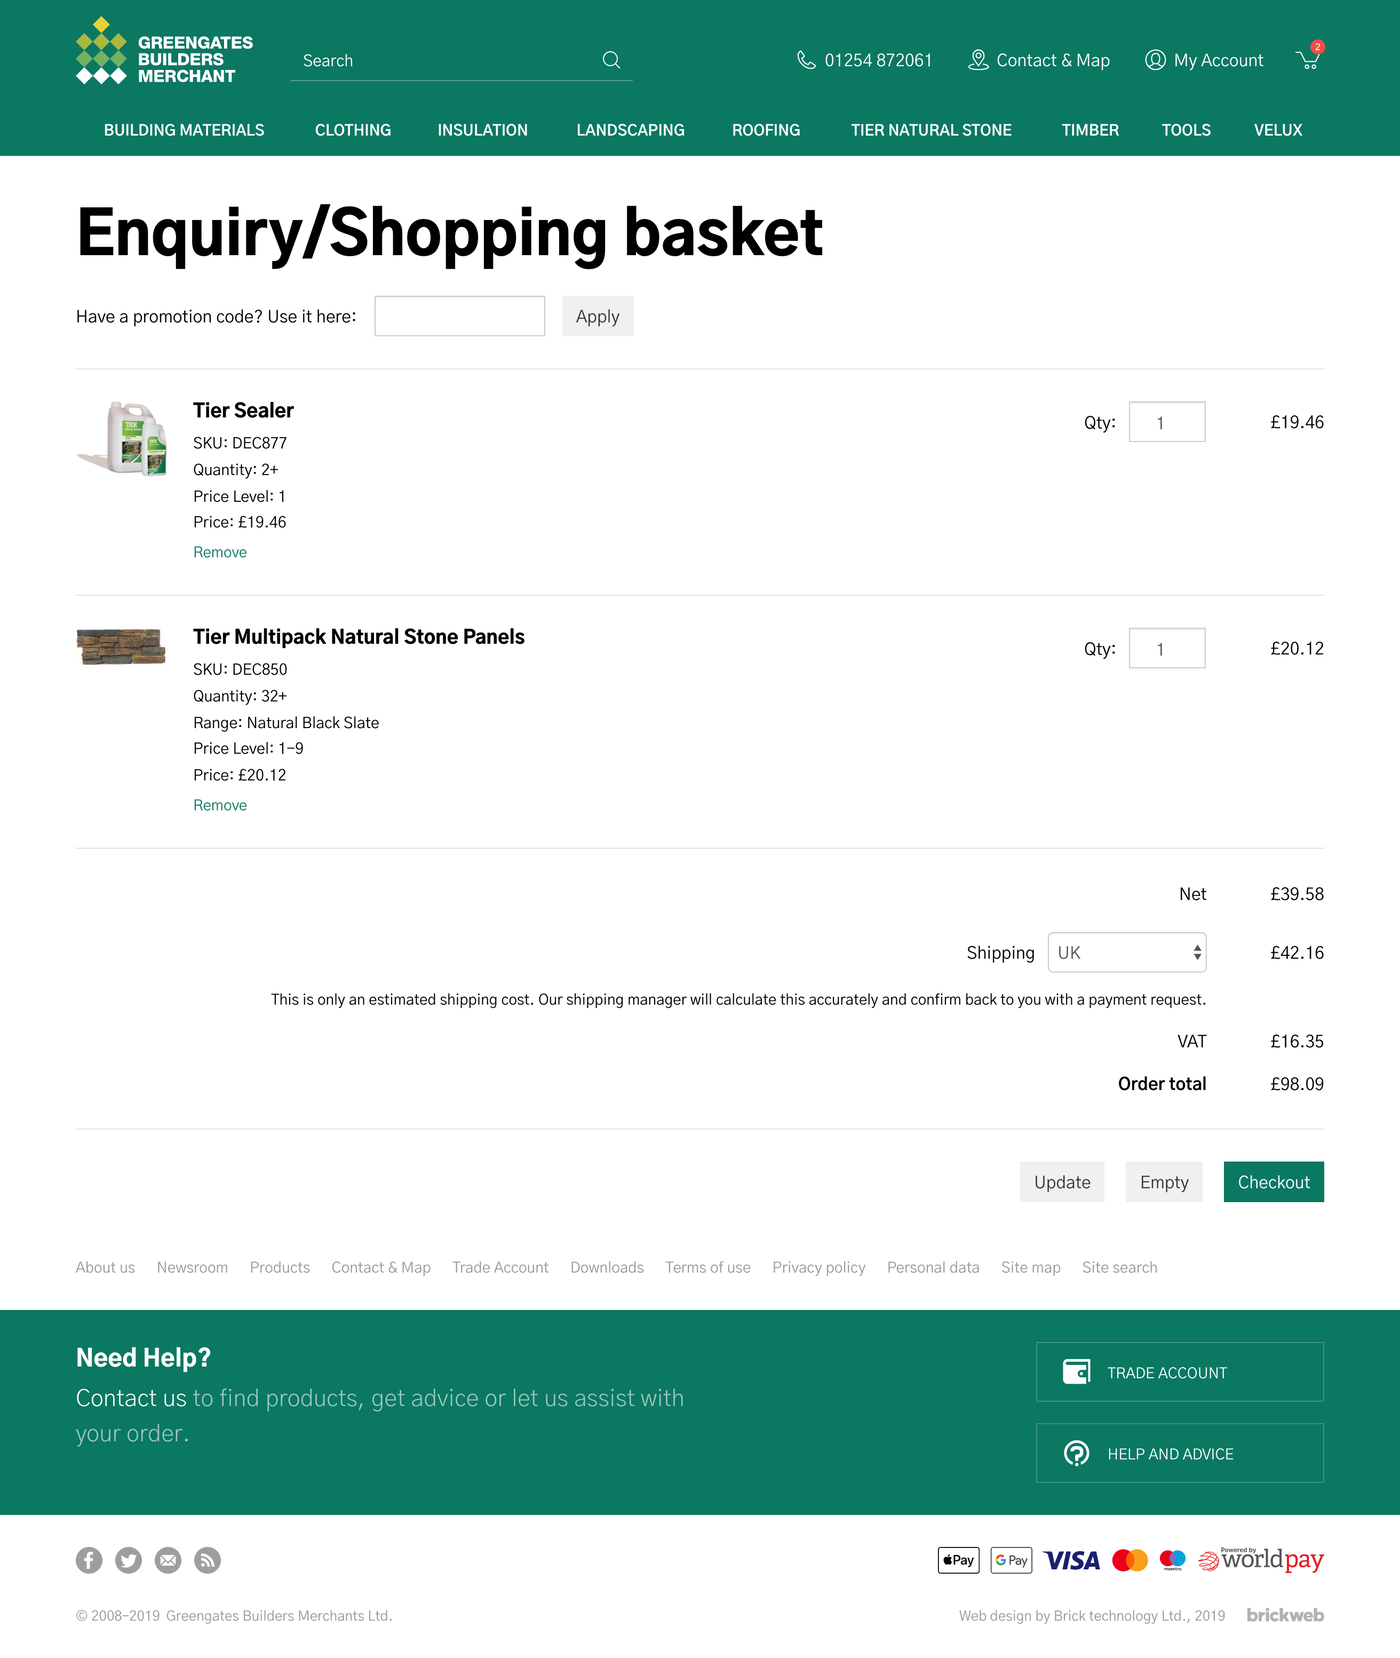 Greengates Builders Merchants (2019) Shopping basket